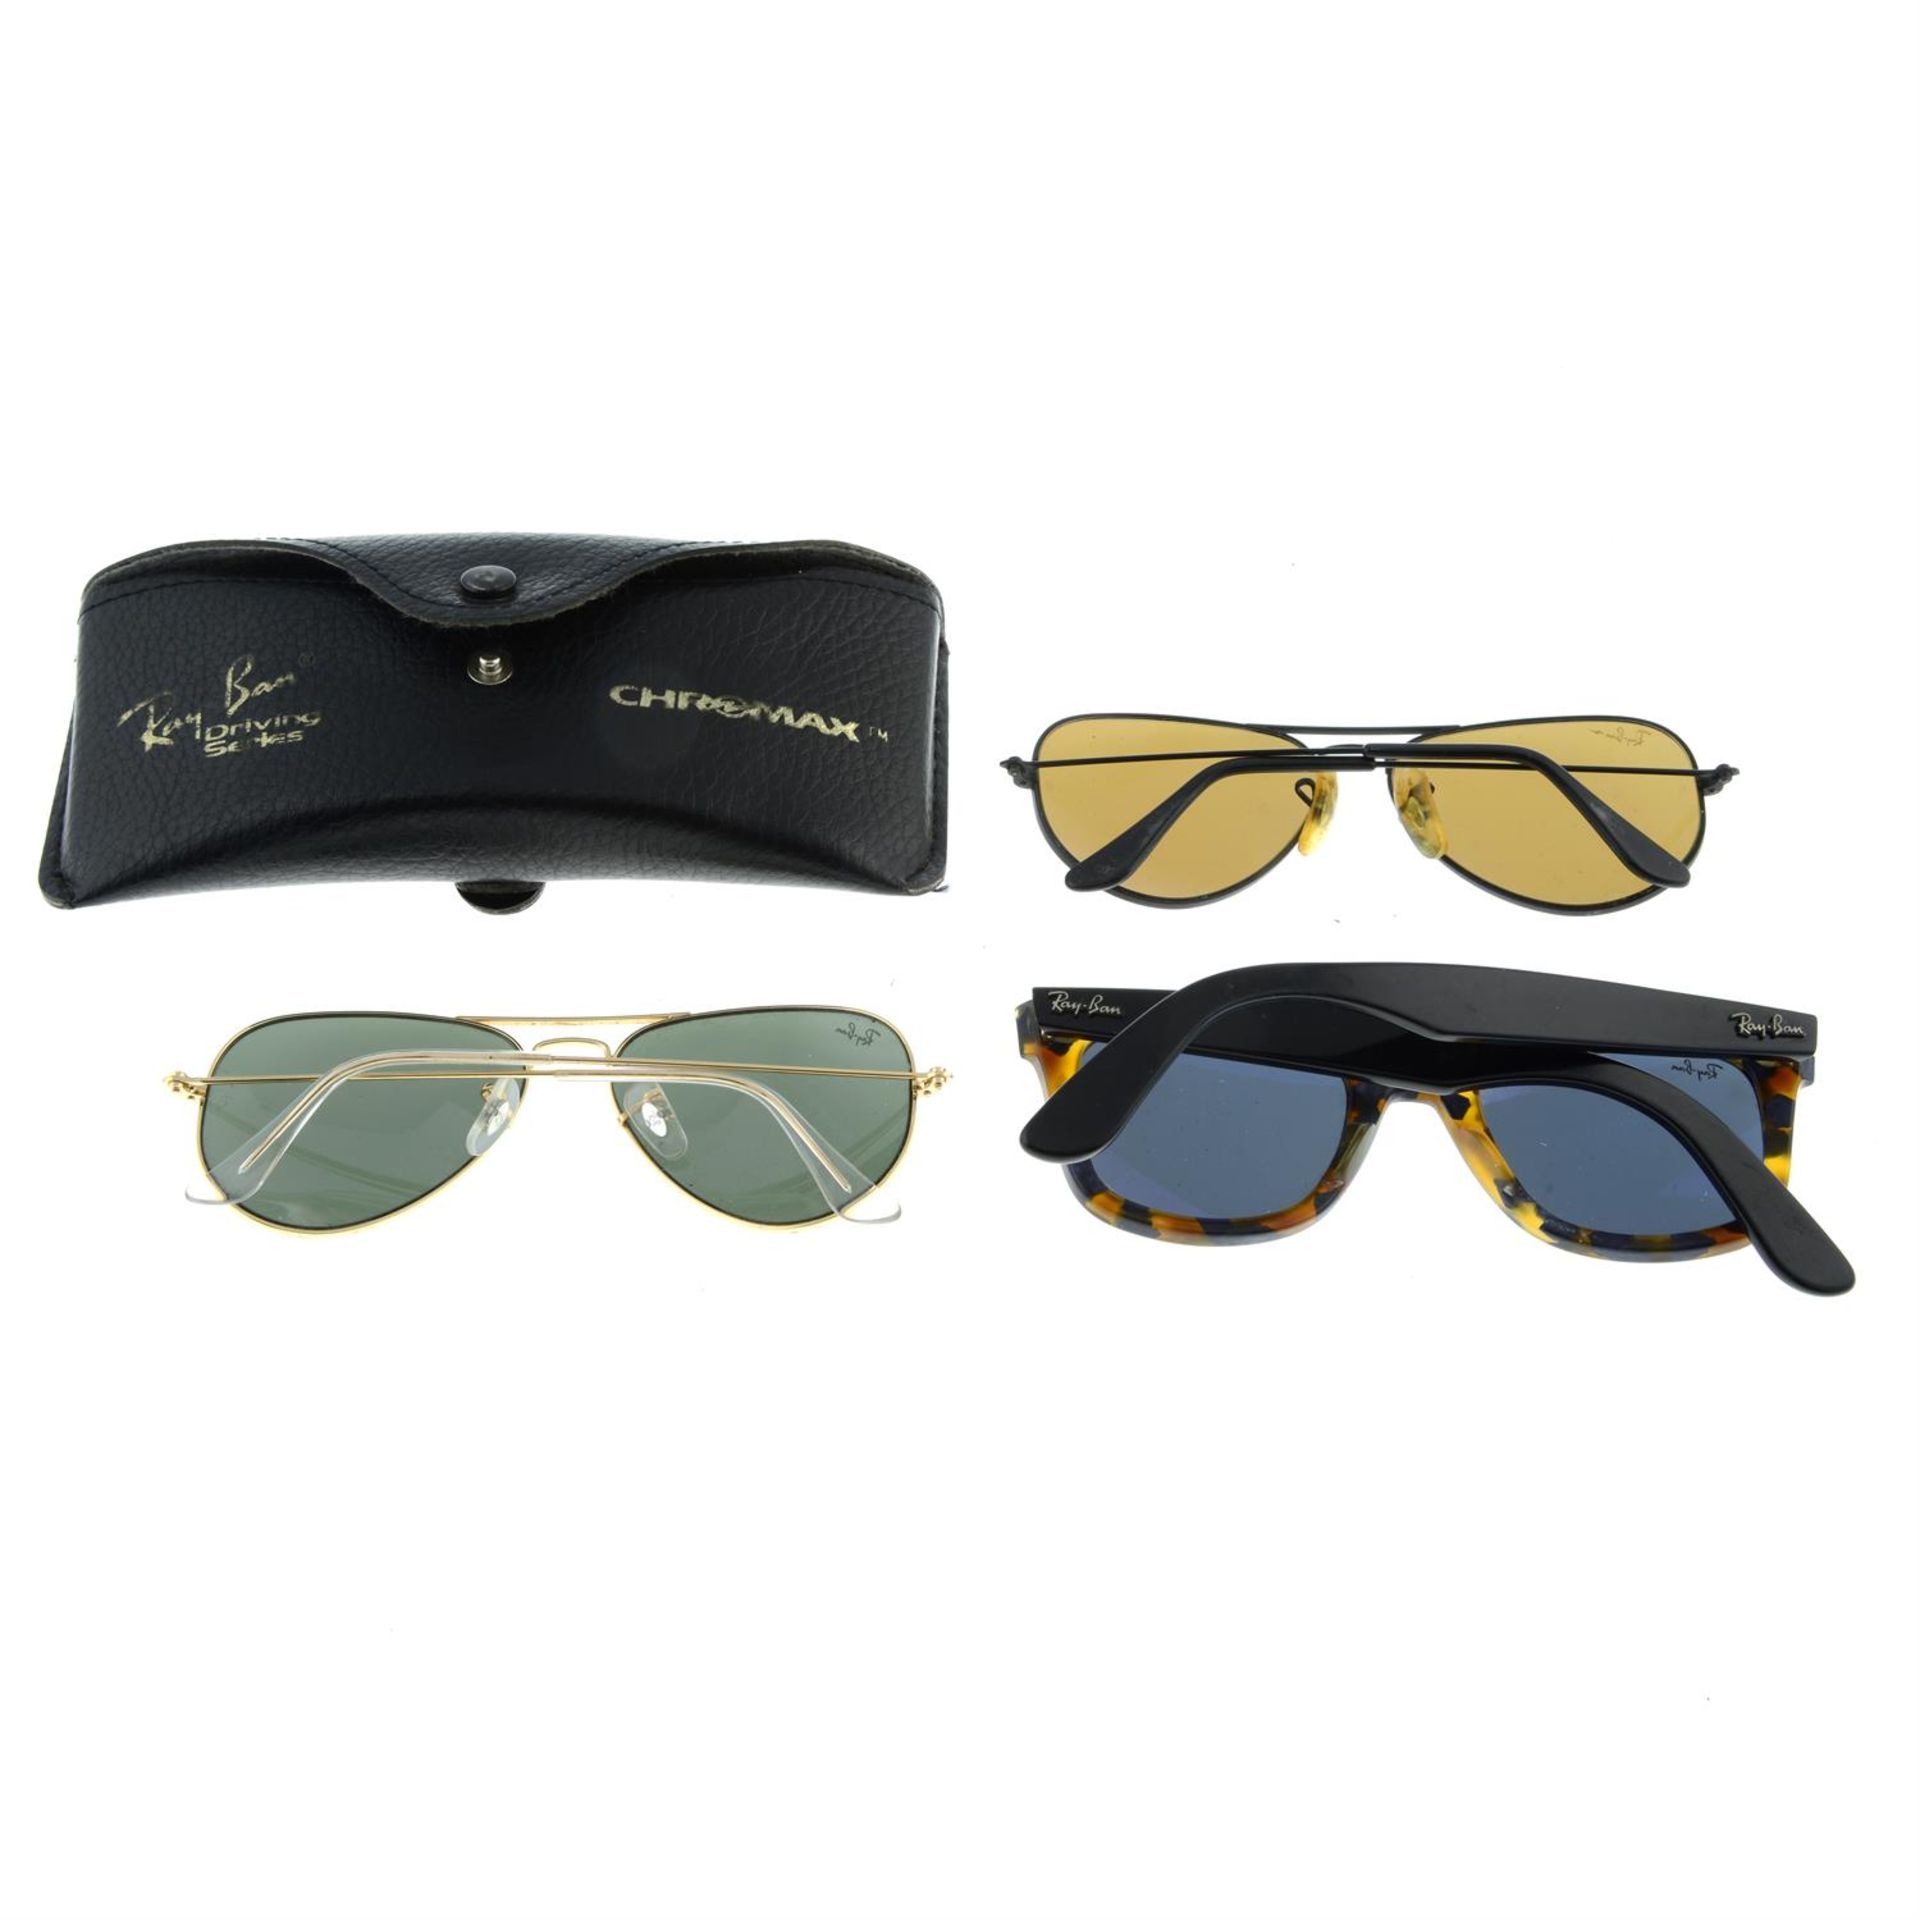 Ray-Ban - three pairs of sunglasses. - Image 2 of 2